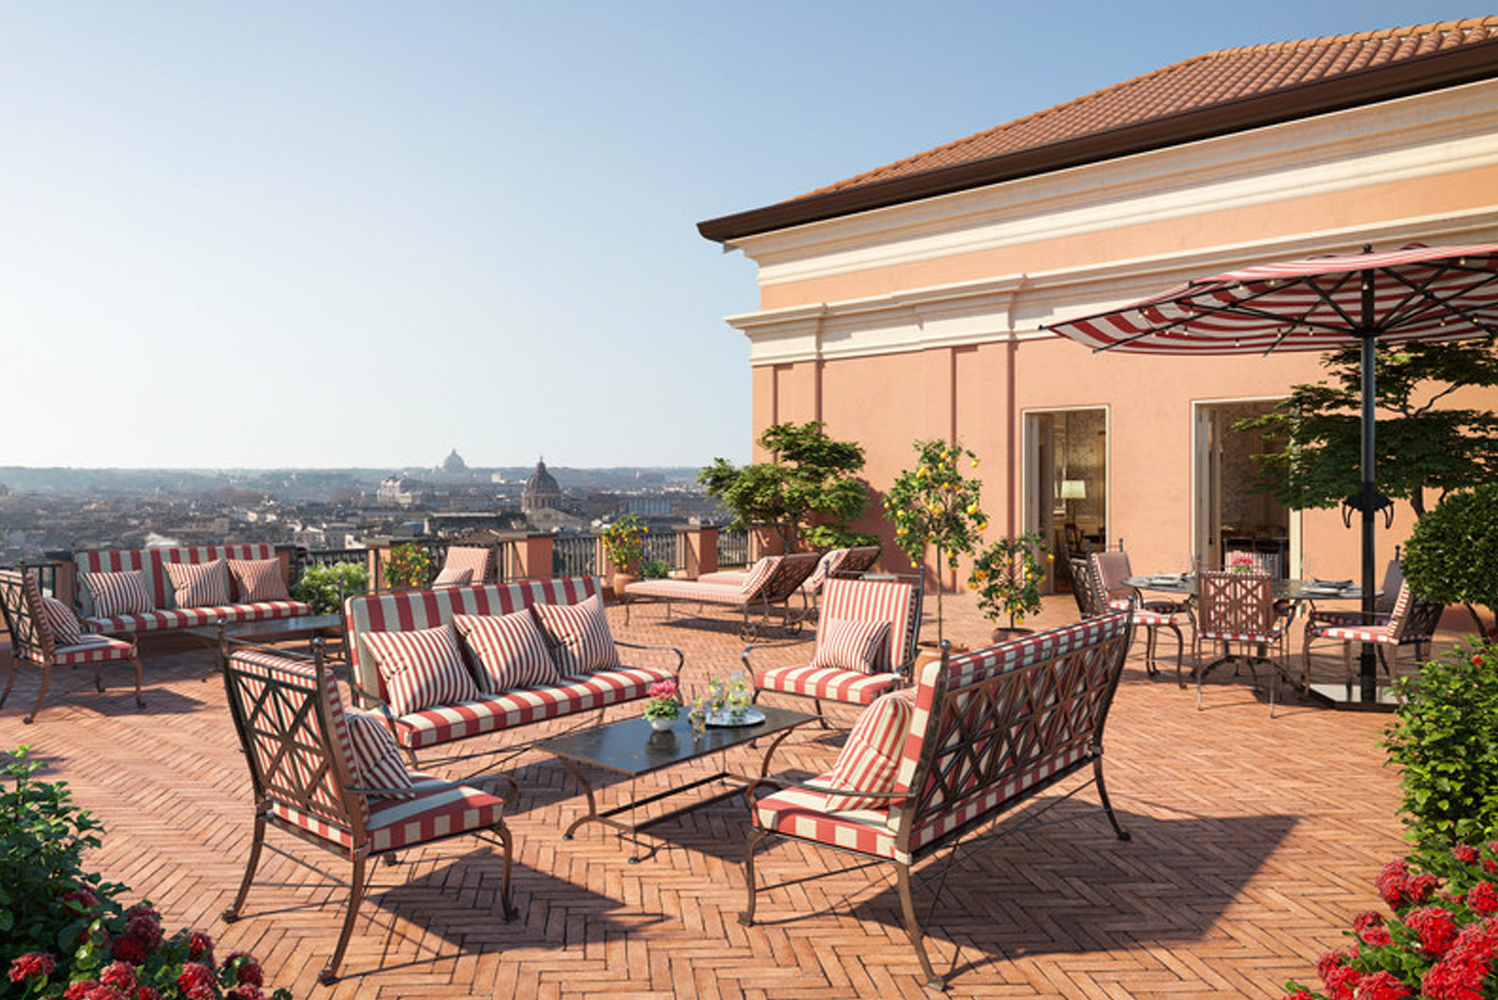 Rocco Forte Hotels unveiled its second hotel in Rome Hotel de la Ville